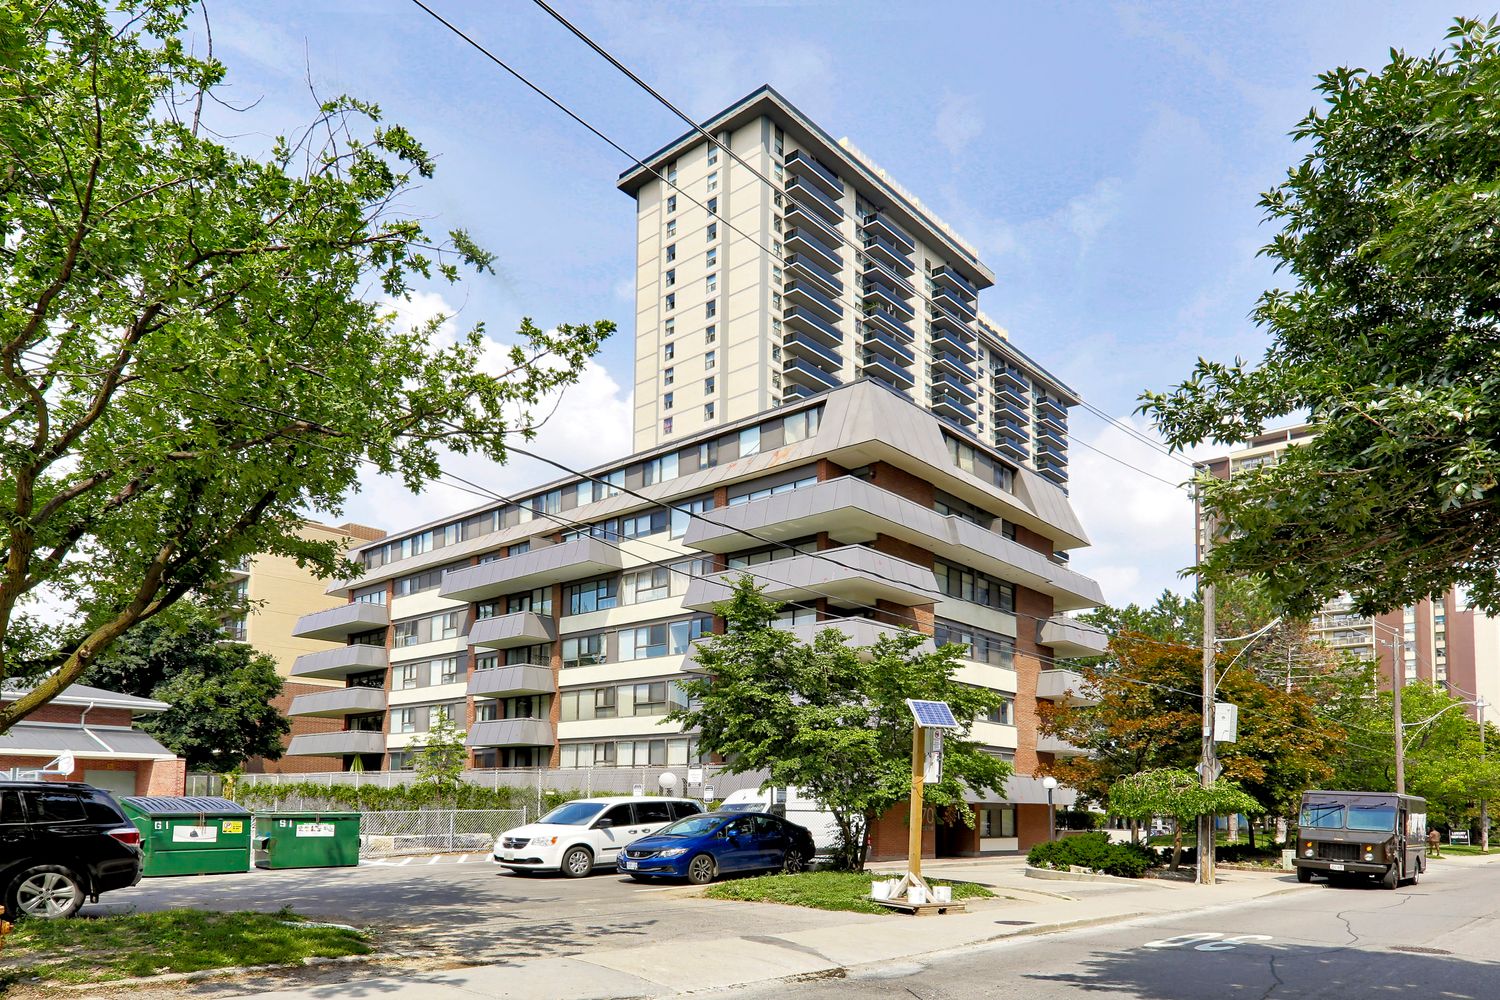 70 Erskine Avenue. 70 Erskine Avenue Condos is located in  Midtown, Toronto - image #1 of 4